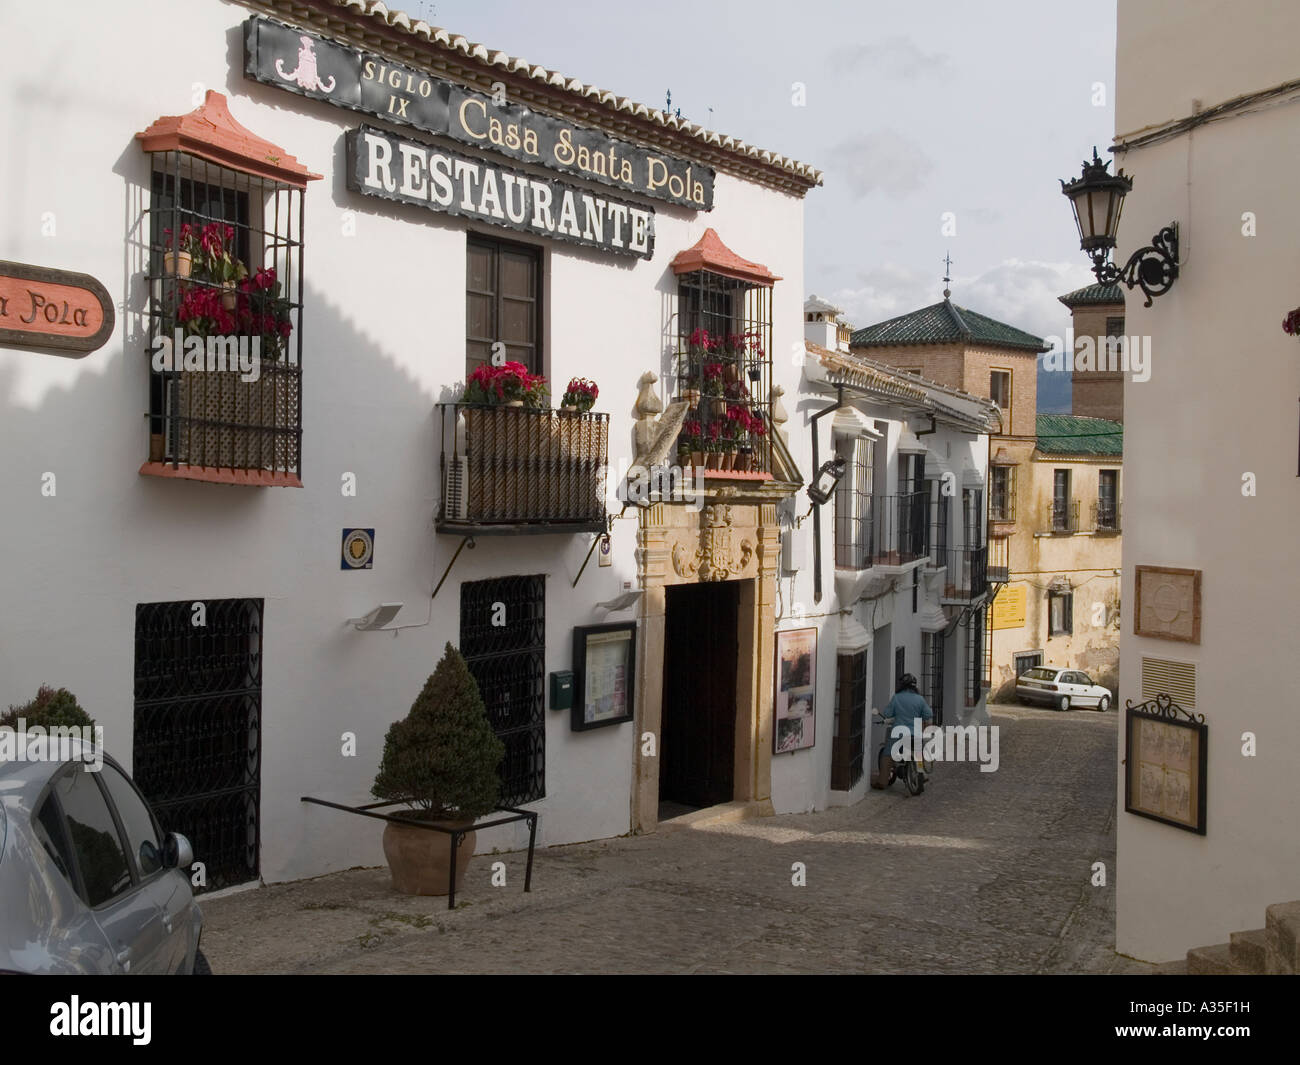 Restaurant Casa Santa Pola in Ronda Andalusia Spain Stock Photo - Alamy